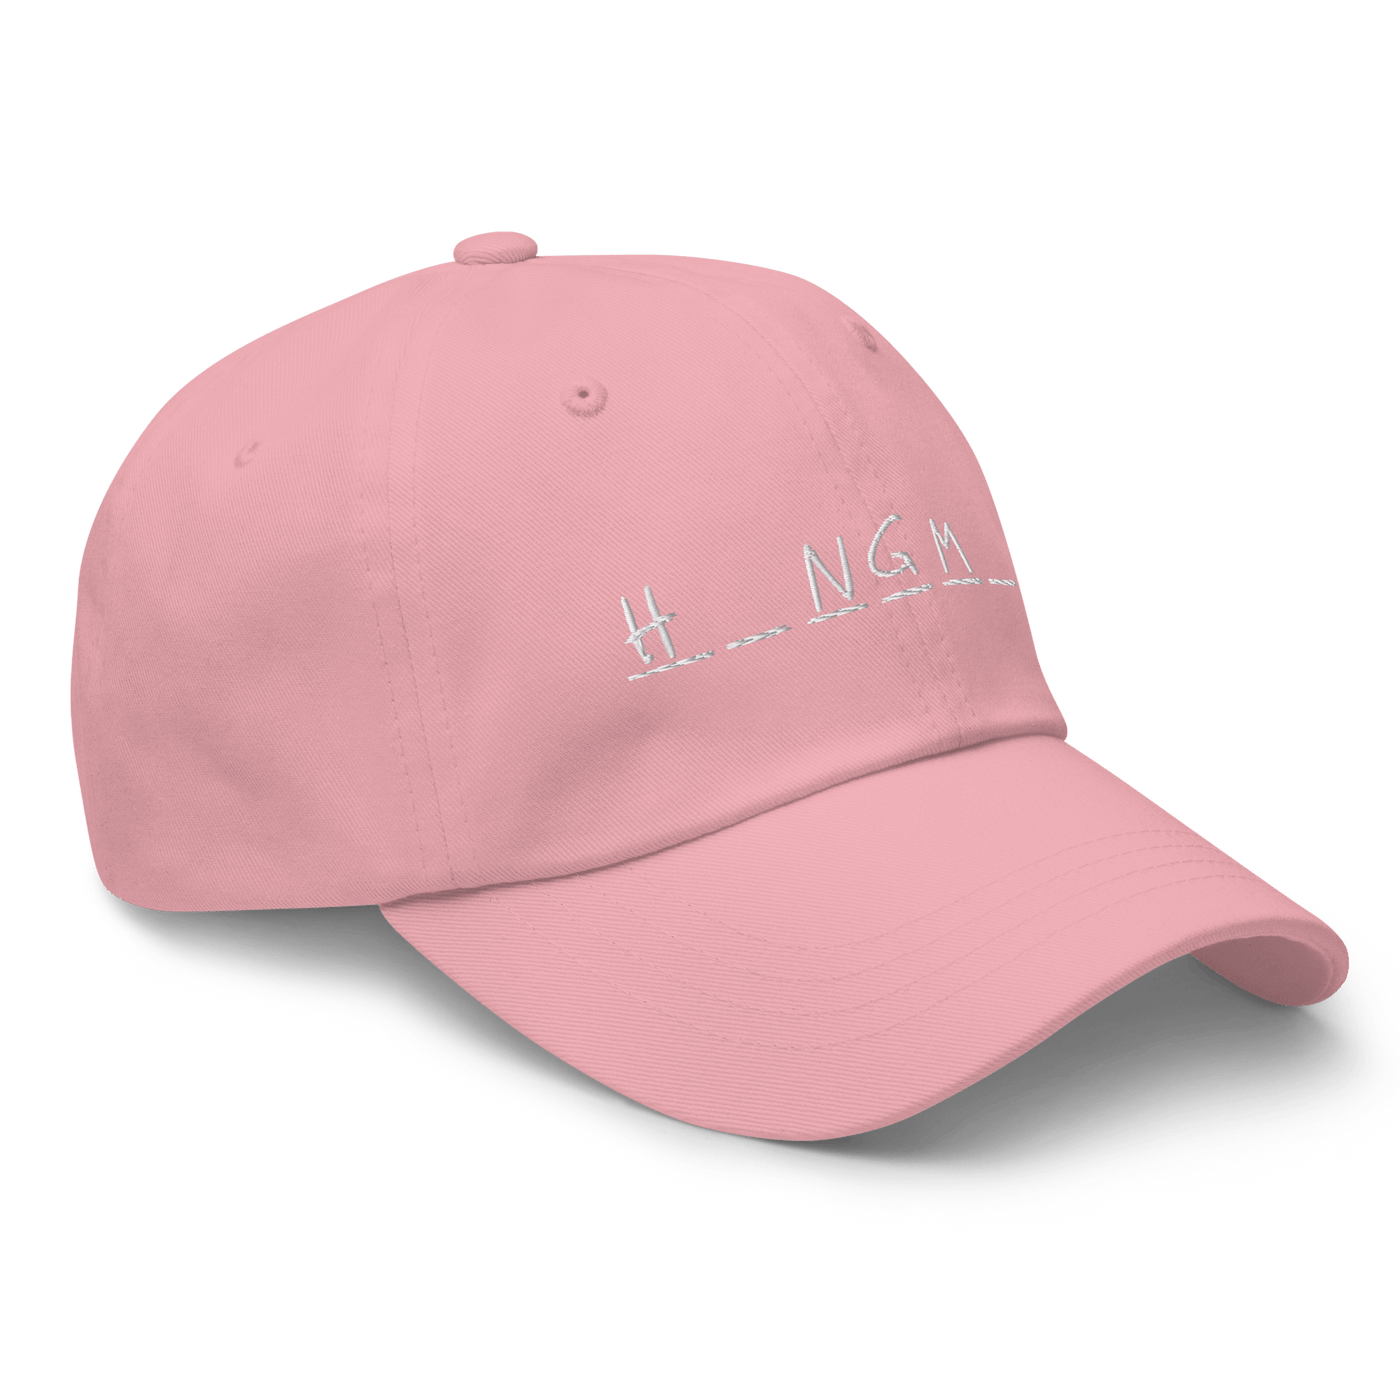 Hangman Dad hat - Pink - - Just Another Cap Store